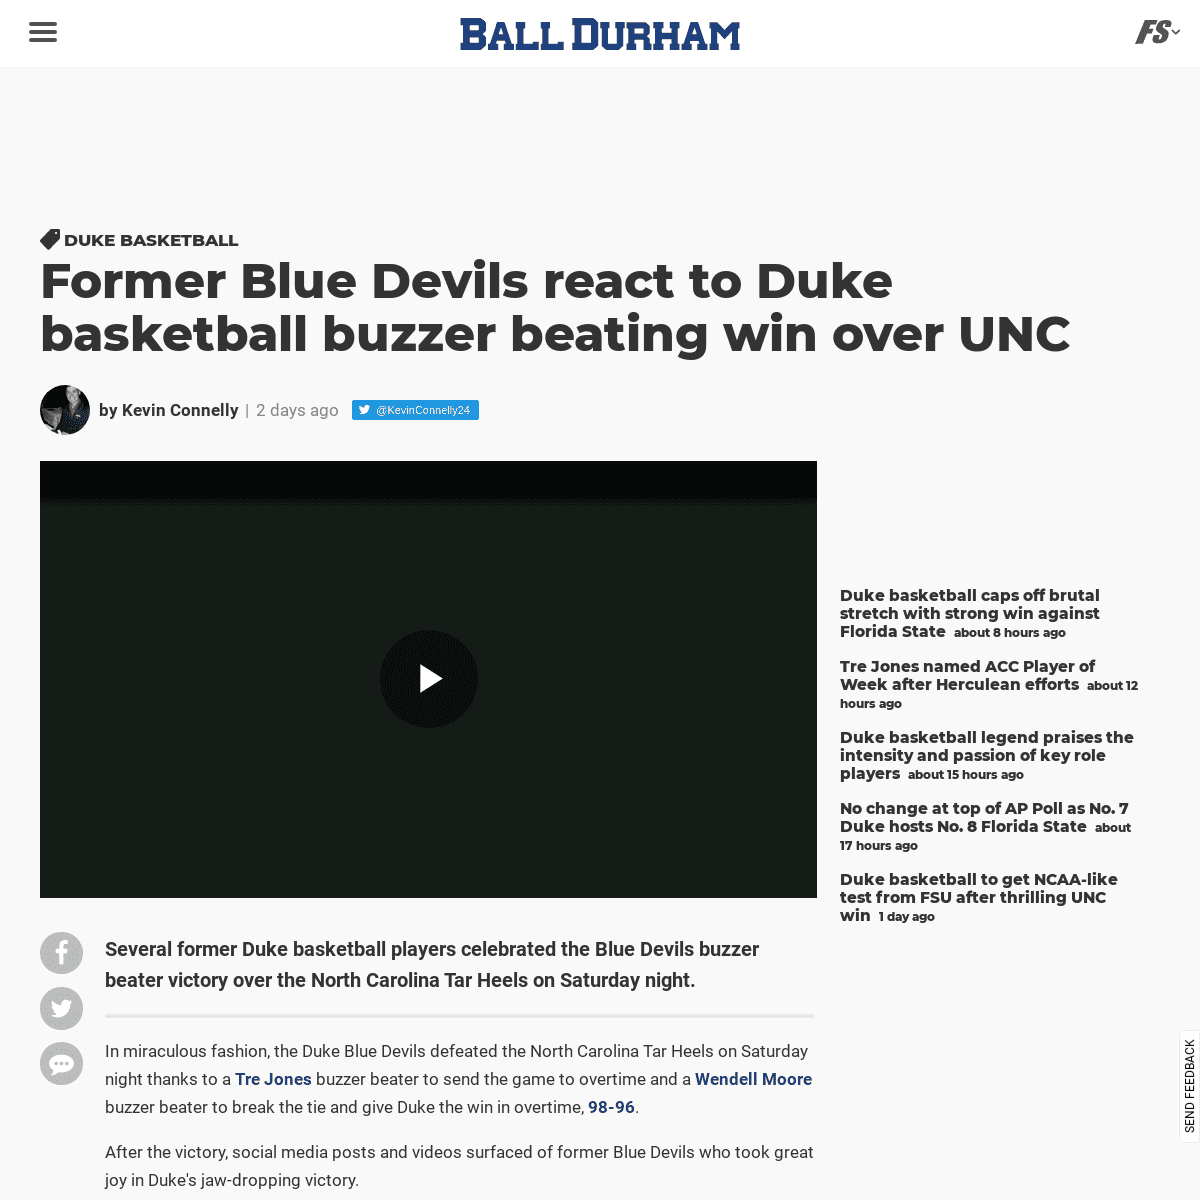 A complete backup of balldurham.com/2020/02/08/former-blue-devils-react-duke-basketball-buzzer-beating-win-unc/